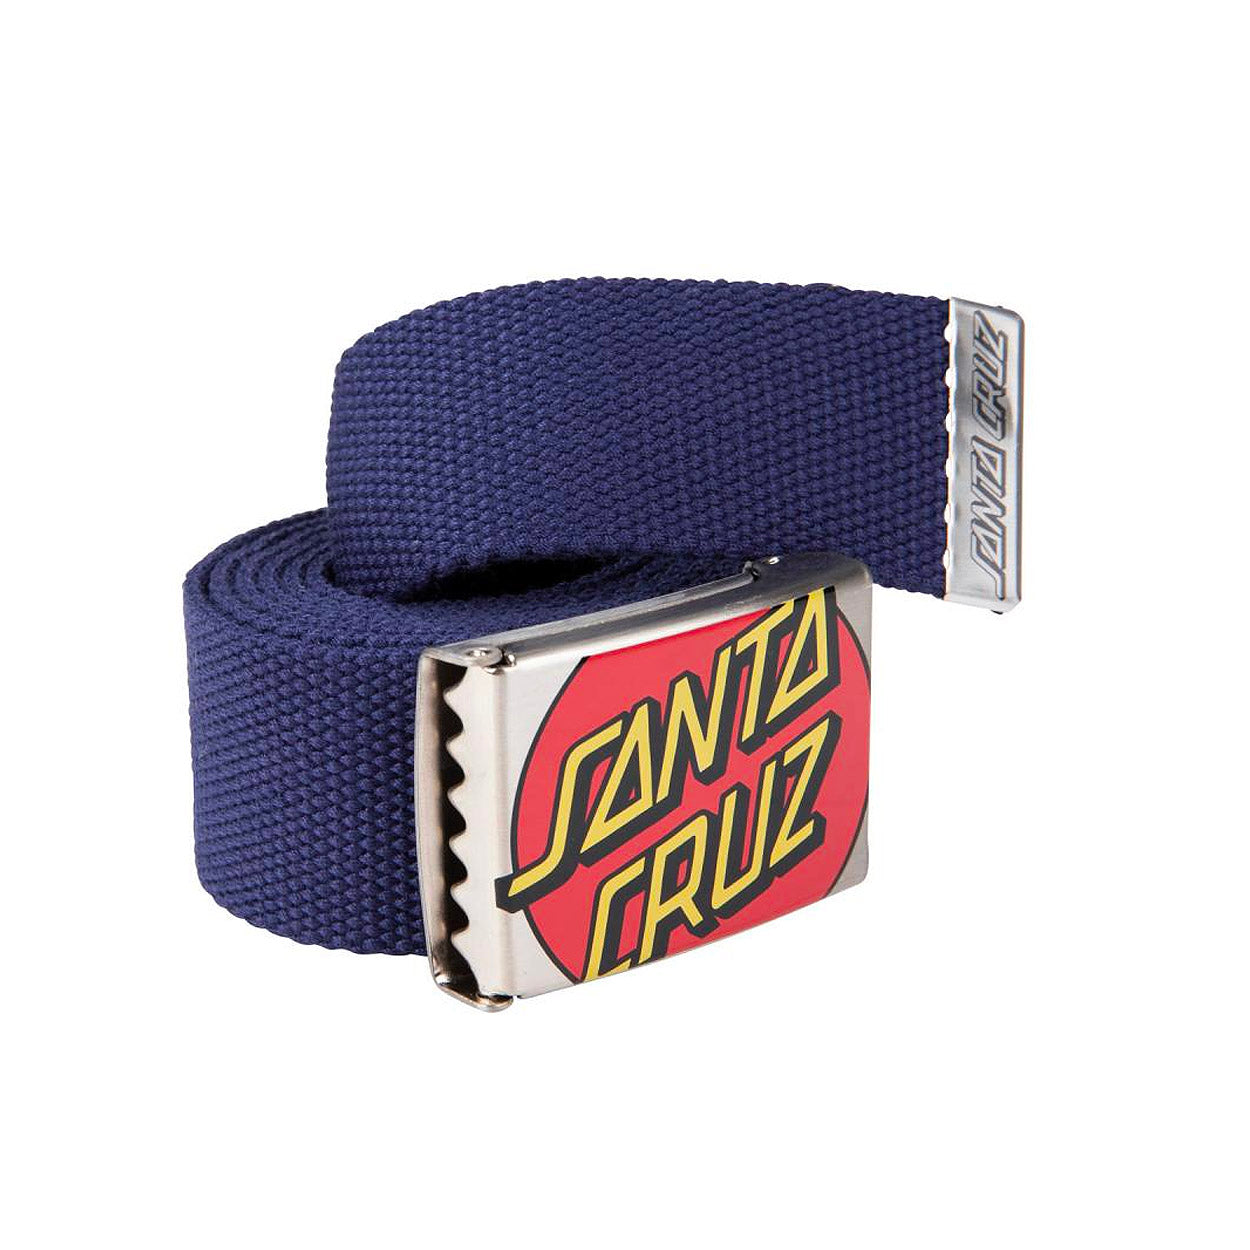 Santa Cruz - Crop Dot Belt - Navy - One Size - Prime Delux Store